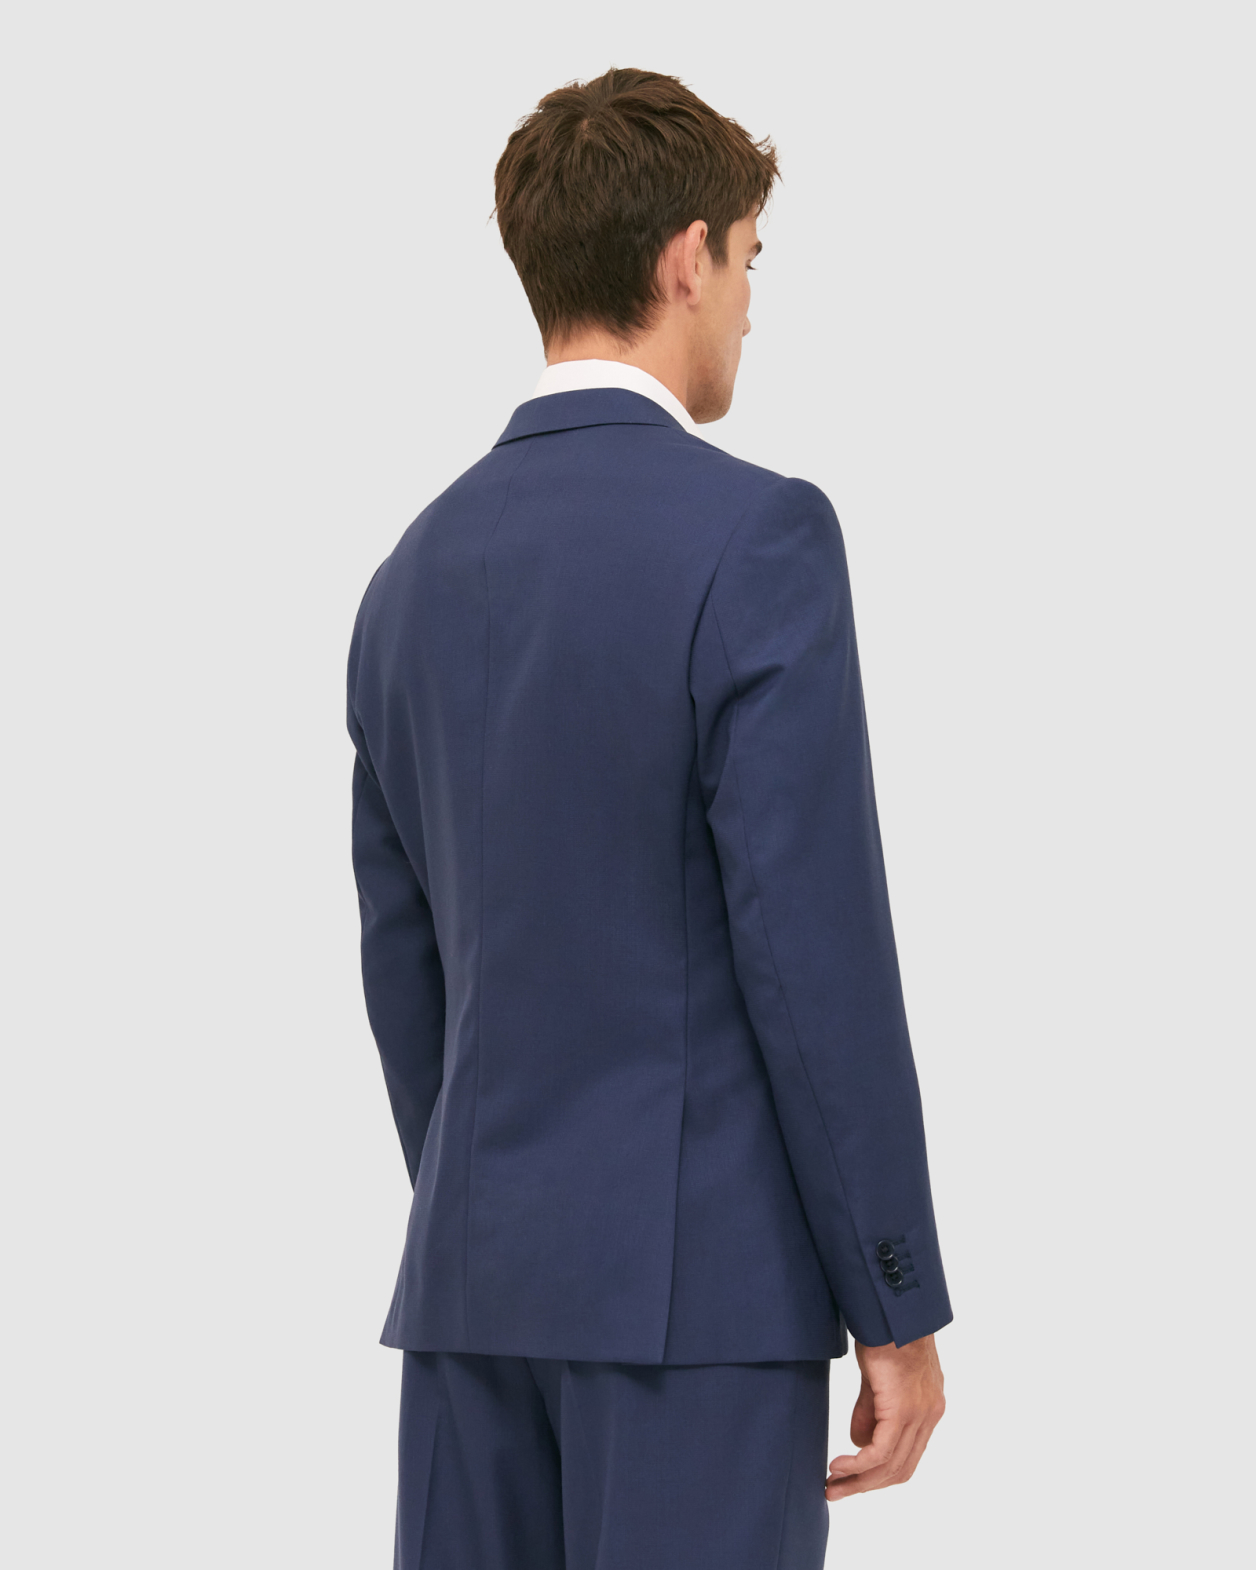 Melbourne Wool Suit Jacket in BLUE